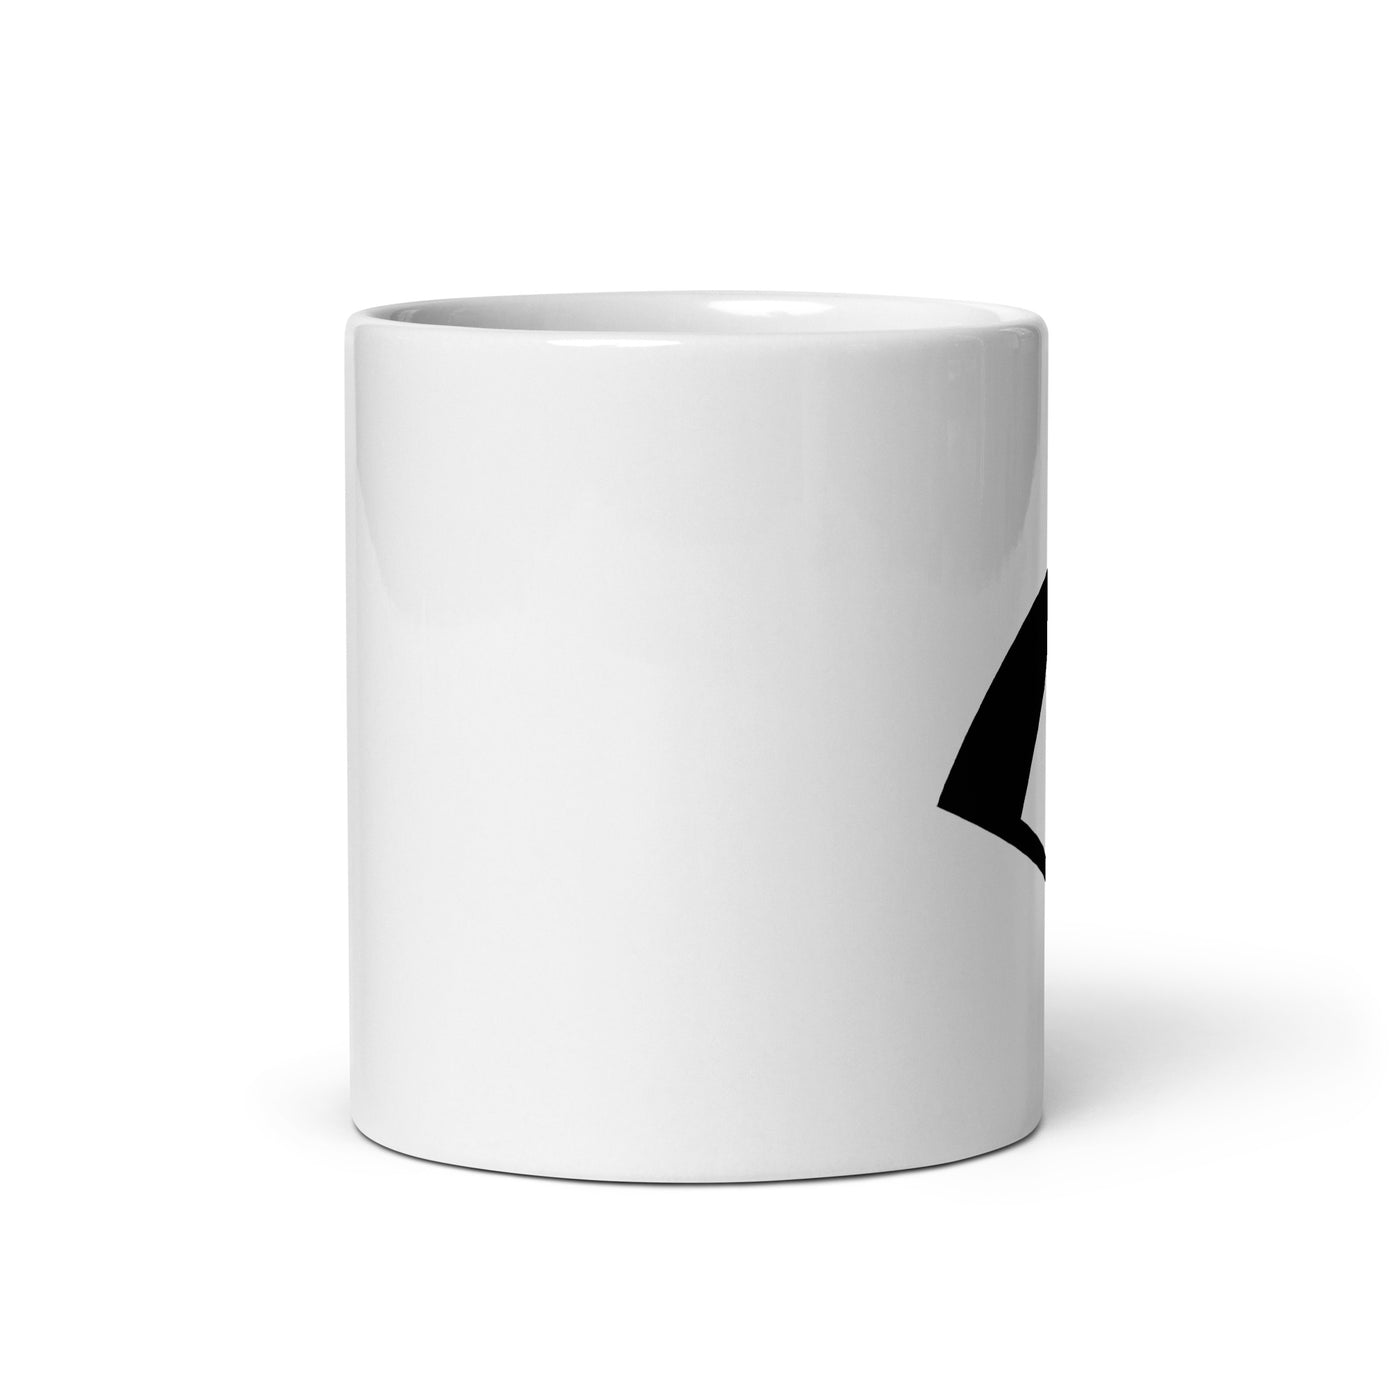 Azure White glossy mug